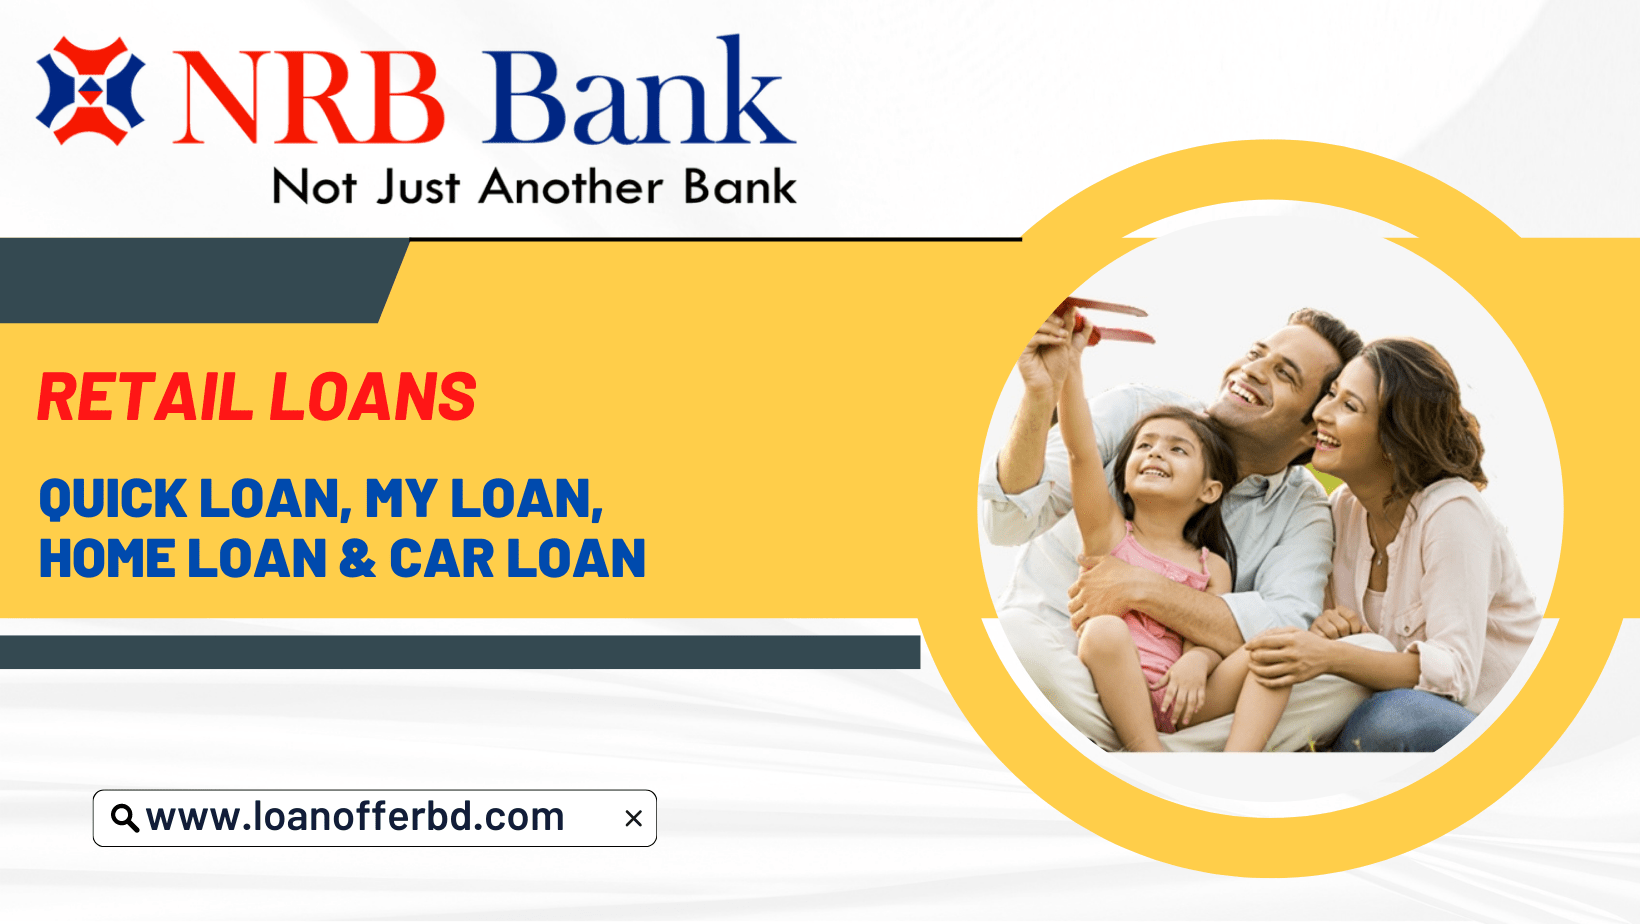 nrb-bank-retail-loans-loanofferbd-bangladesh-